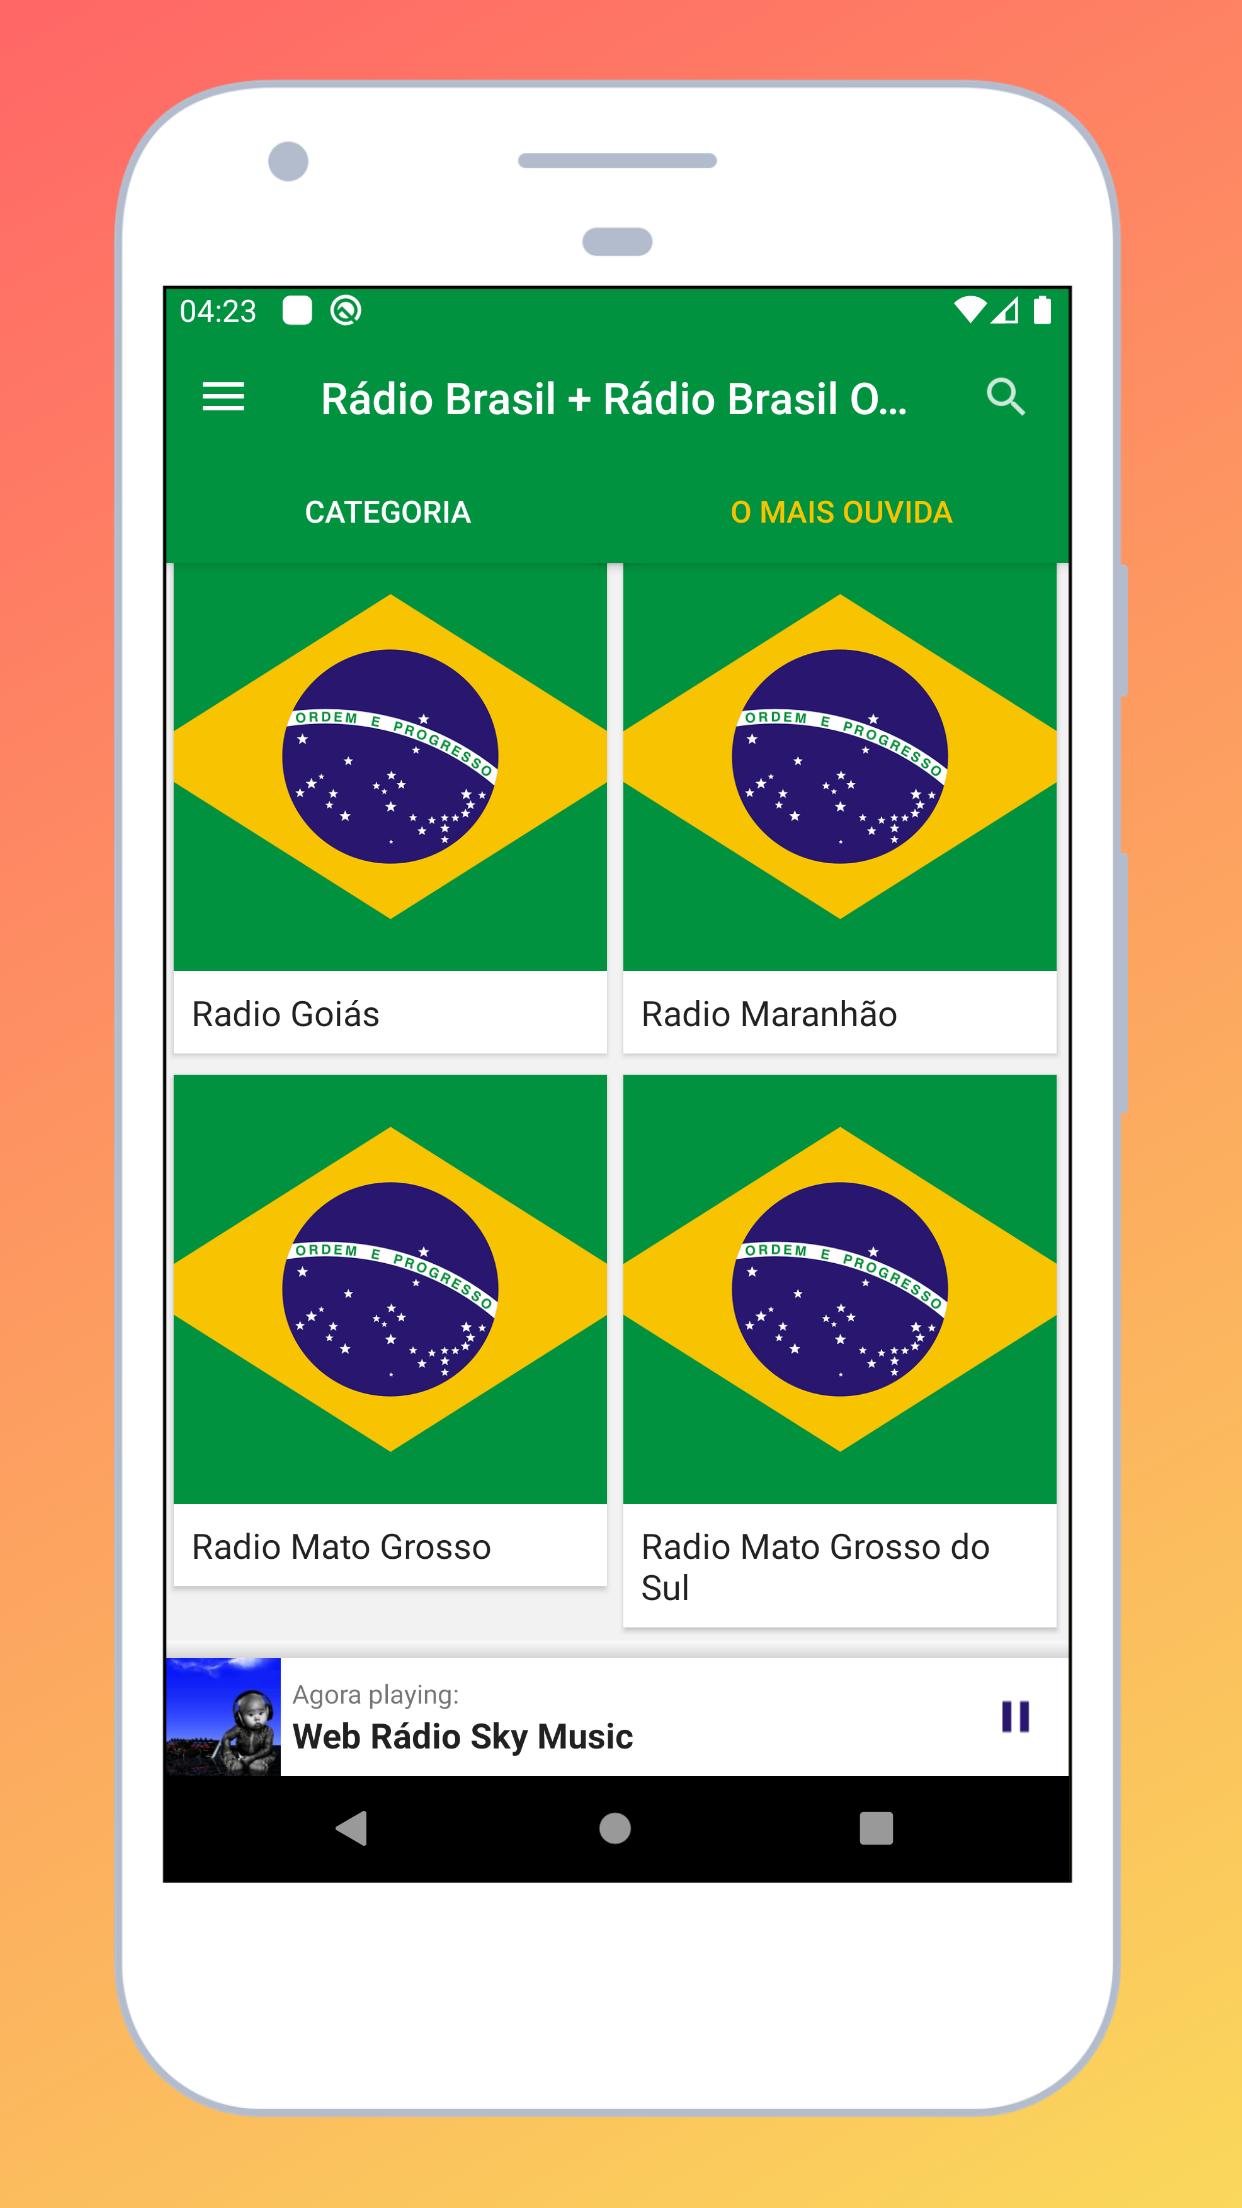 Radio Brazil + Radio Brasil FM & AM - Radio Online for Android - APK  Download